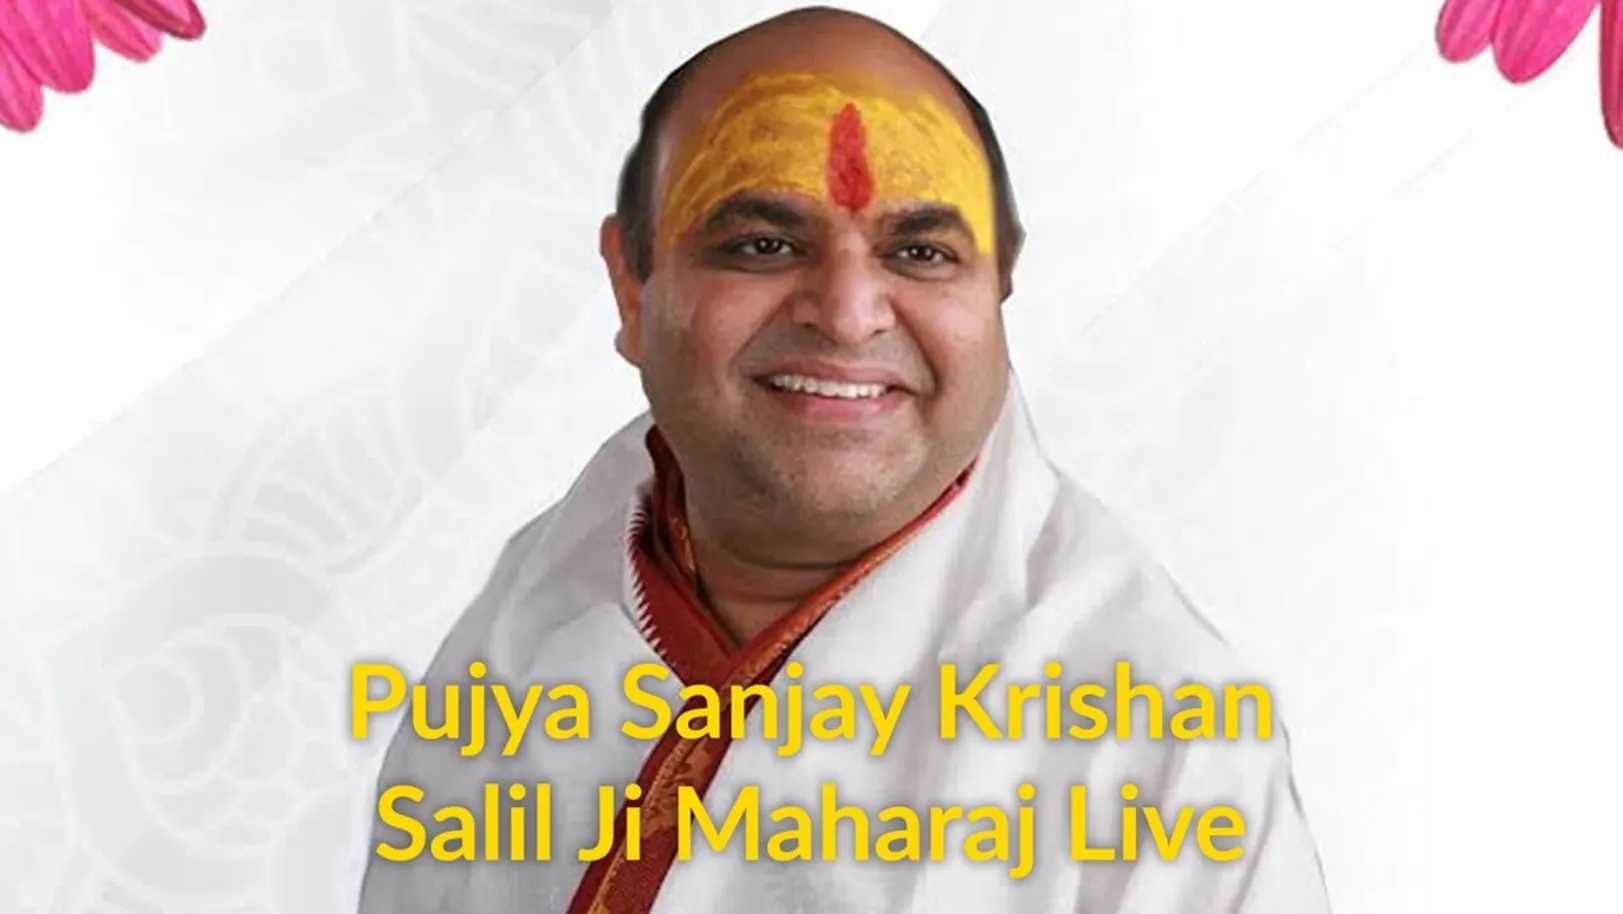 Pujya Sanjay Salil Ji Maharaj Live Streaming Now On Sanskar TV